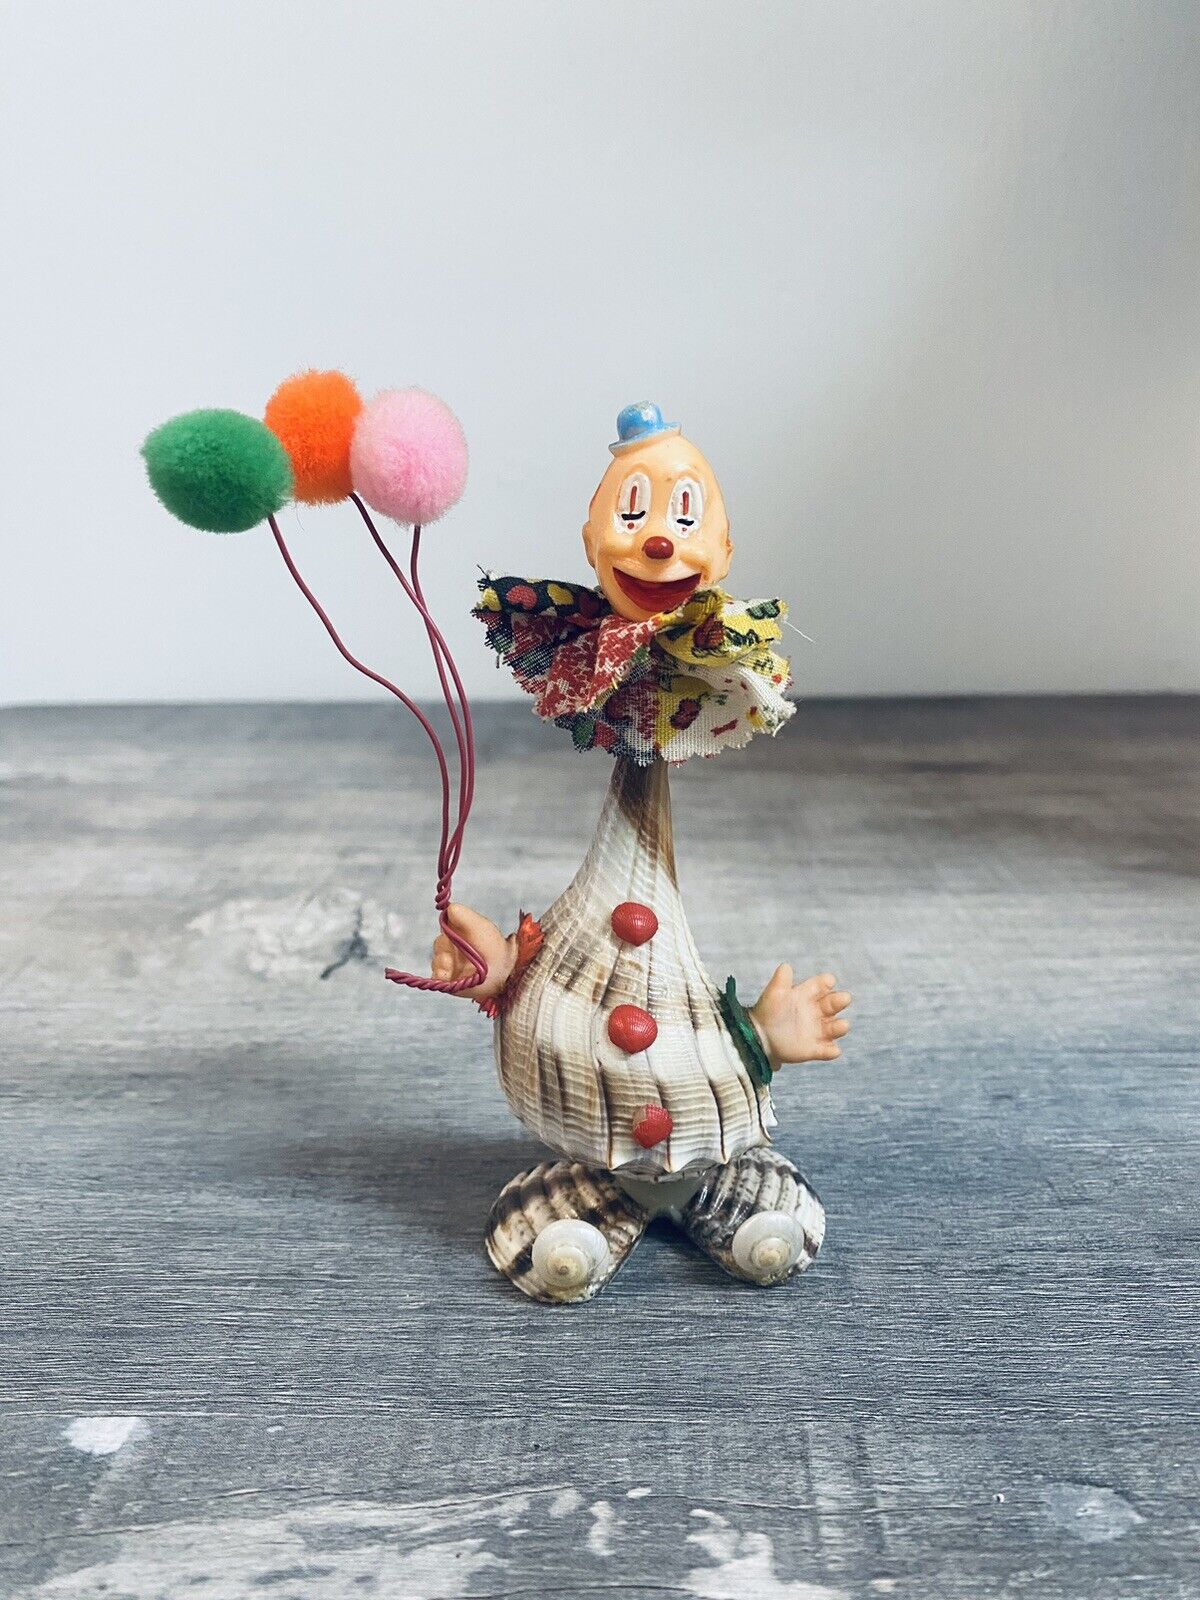 Vintage SeaShell Art Clown Circus Pom Pom Balloons Kitschy Mid Century Conch